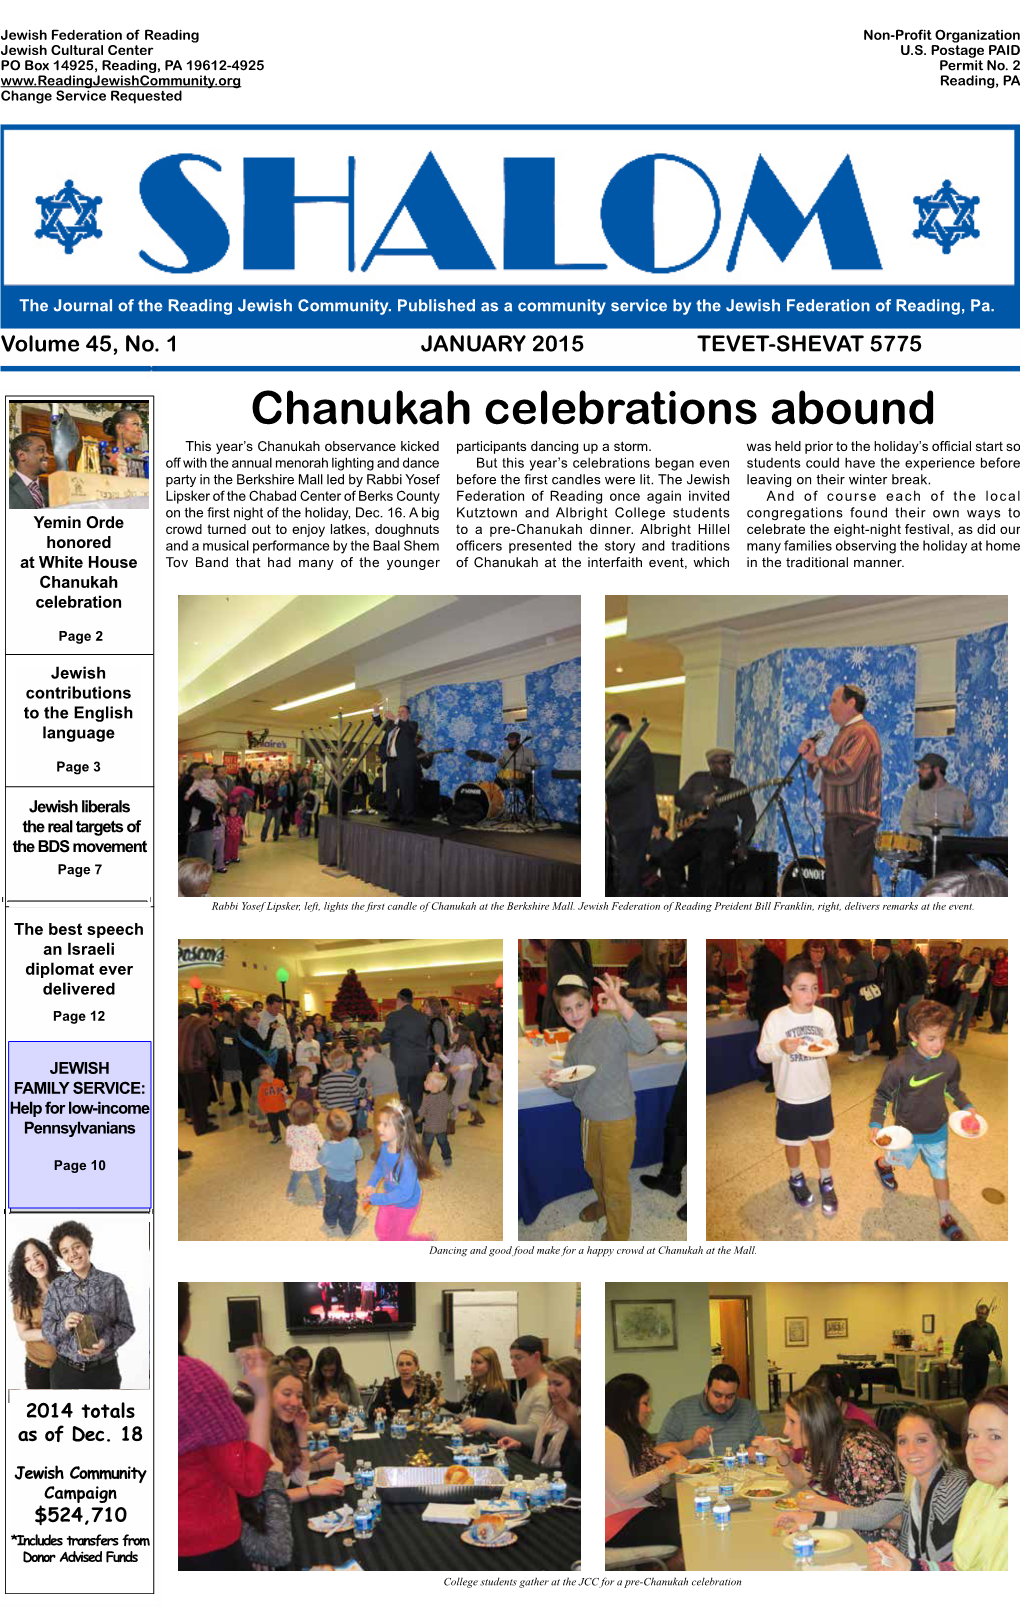 Chanukah Celebrations Abound